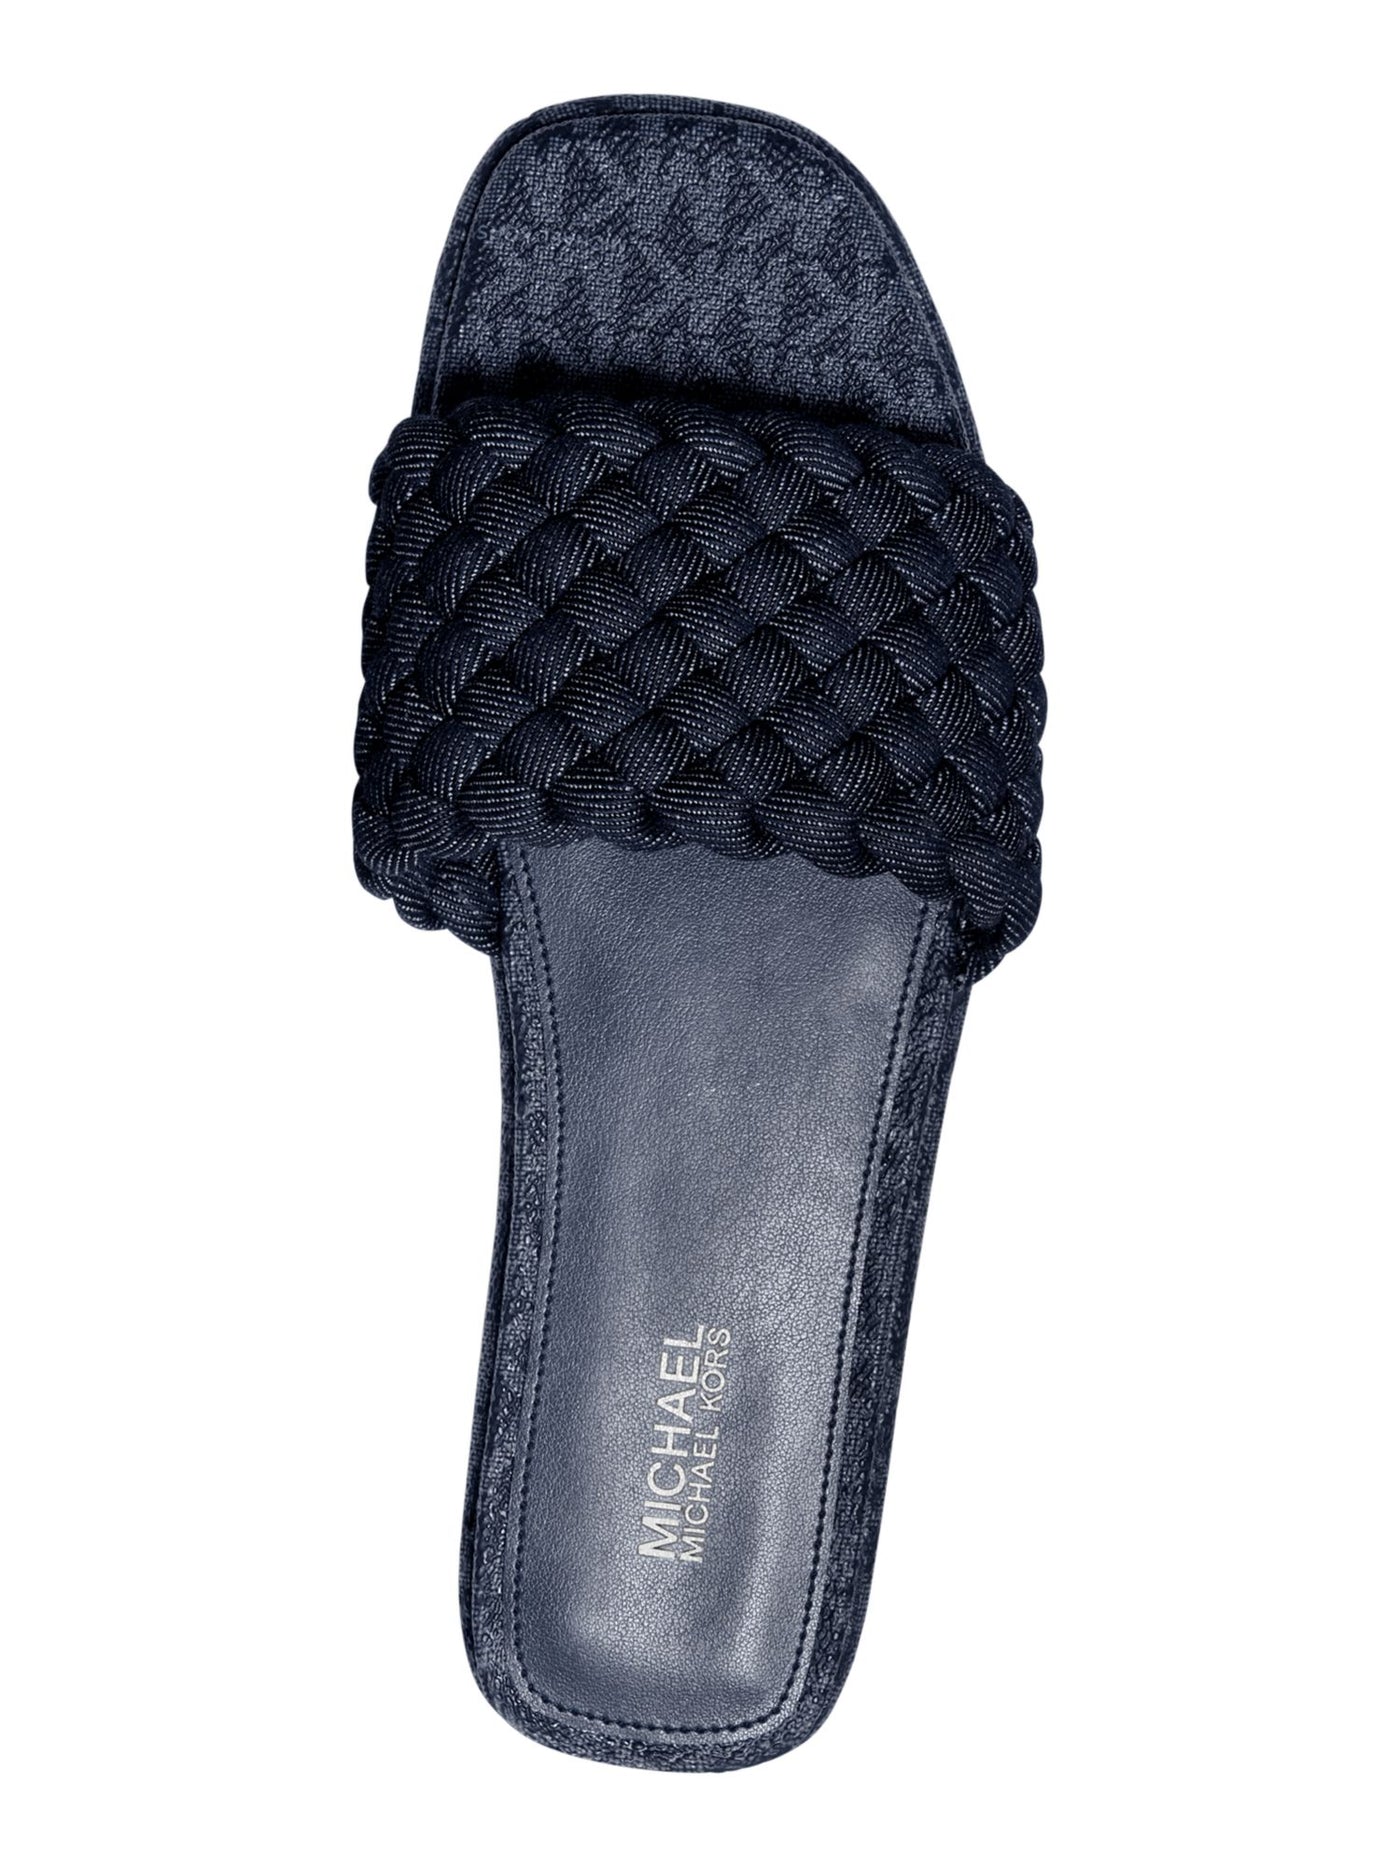 MICHAEL KORS Womens Black Woven Amelia Round Toe Slip On Slide Sandals Shoes 6 M